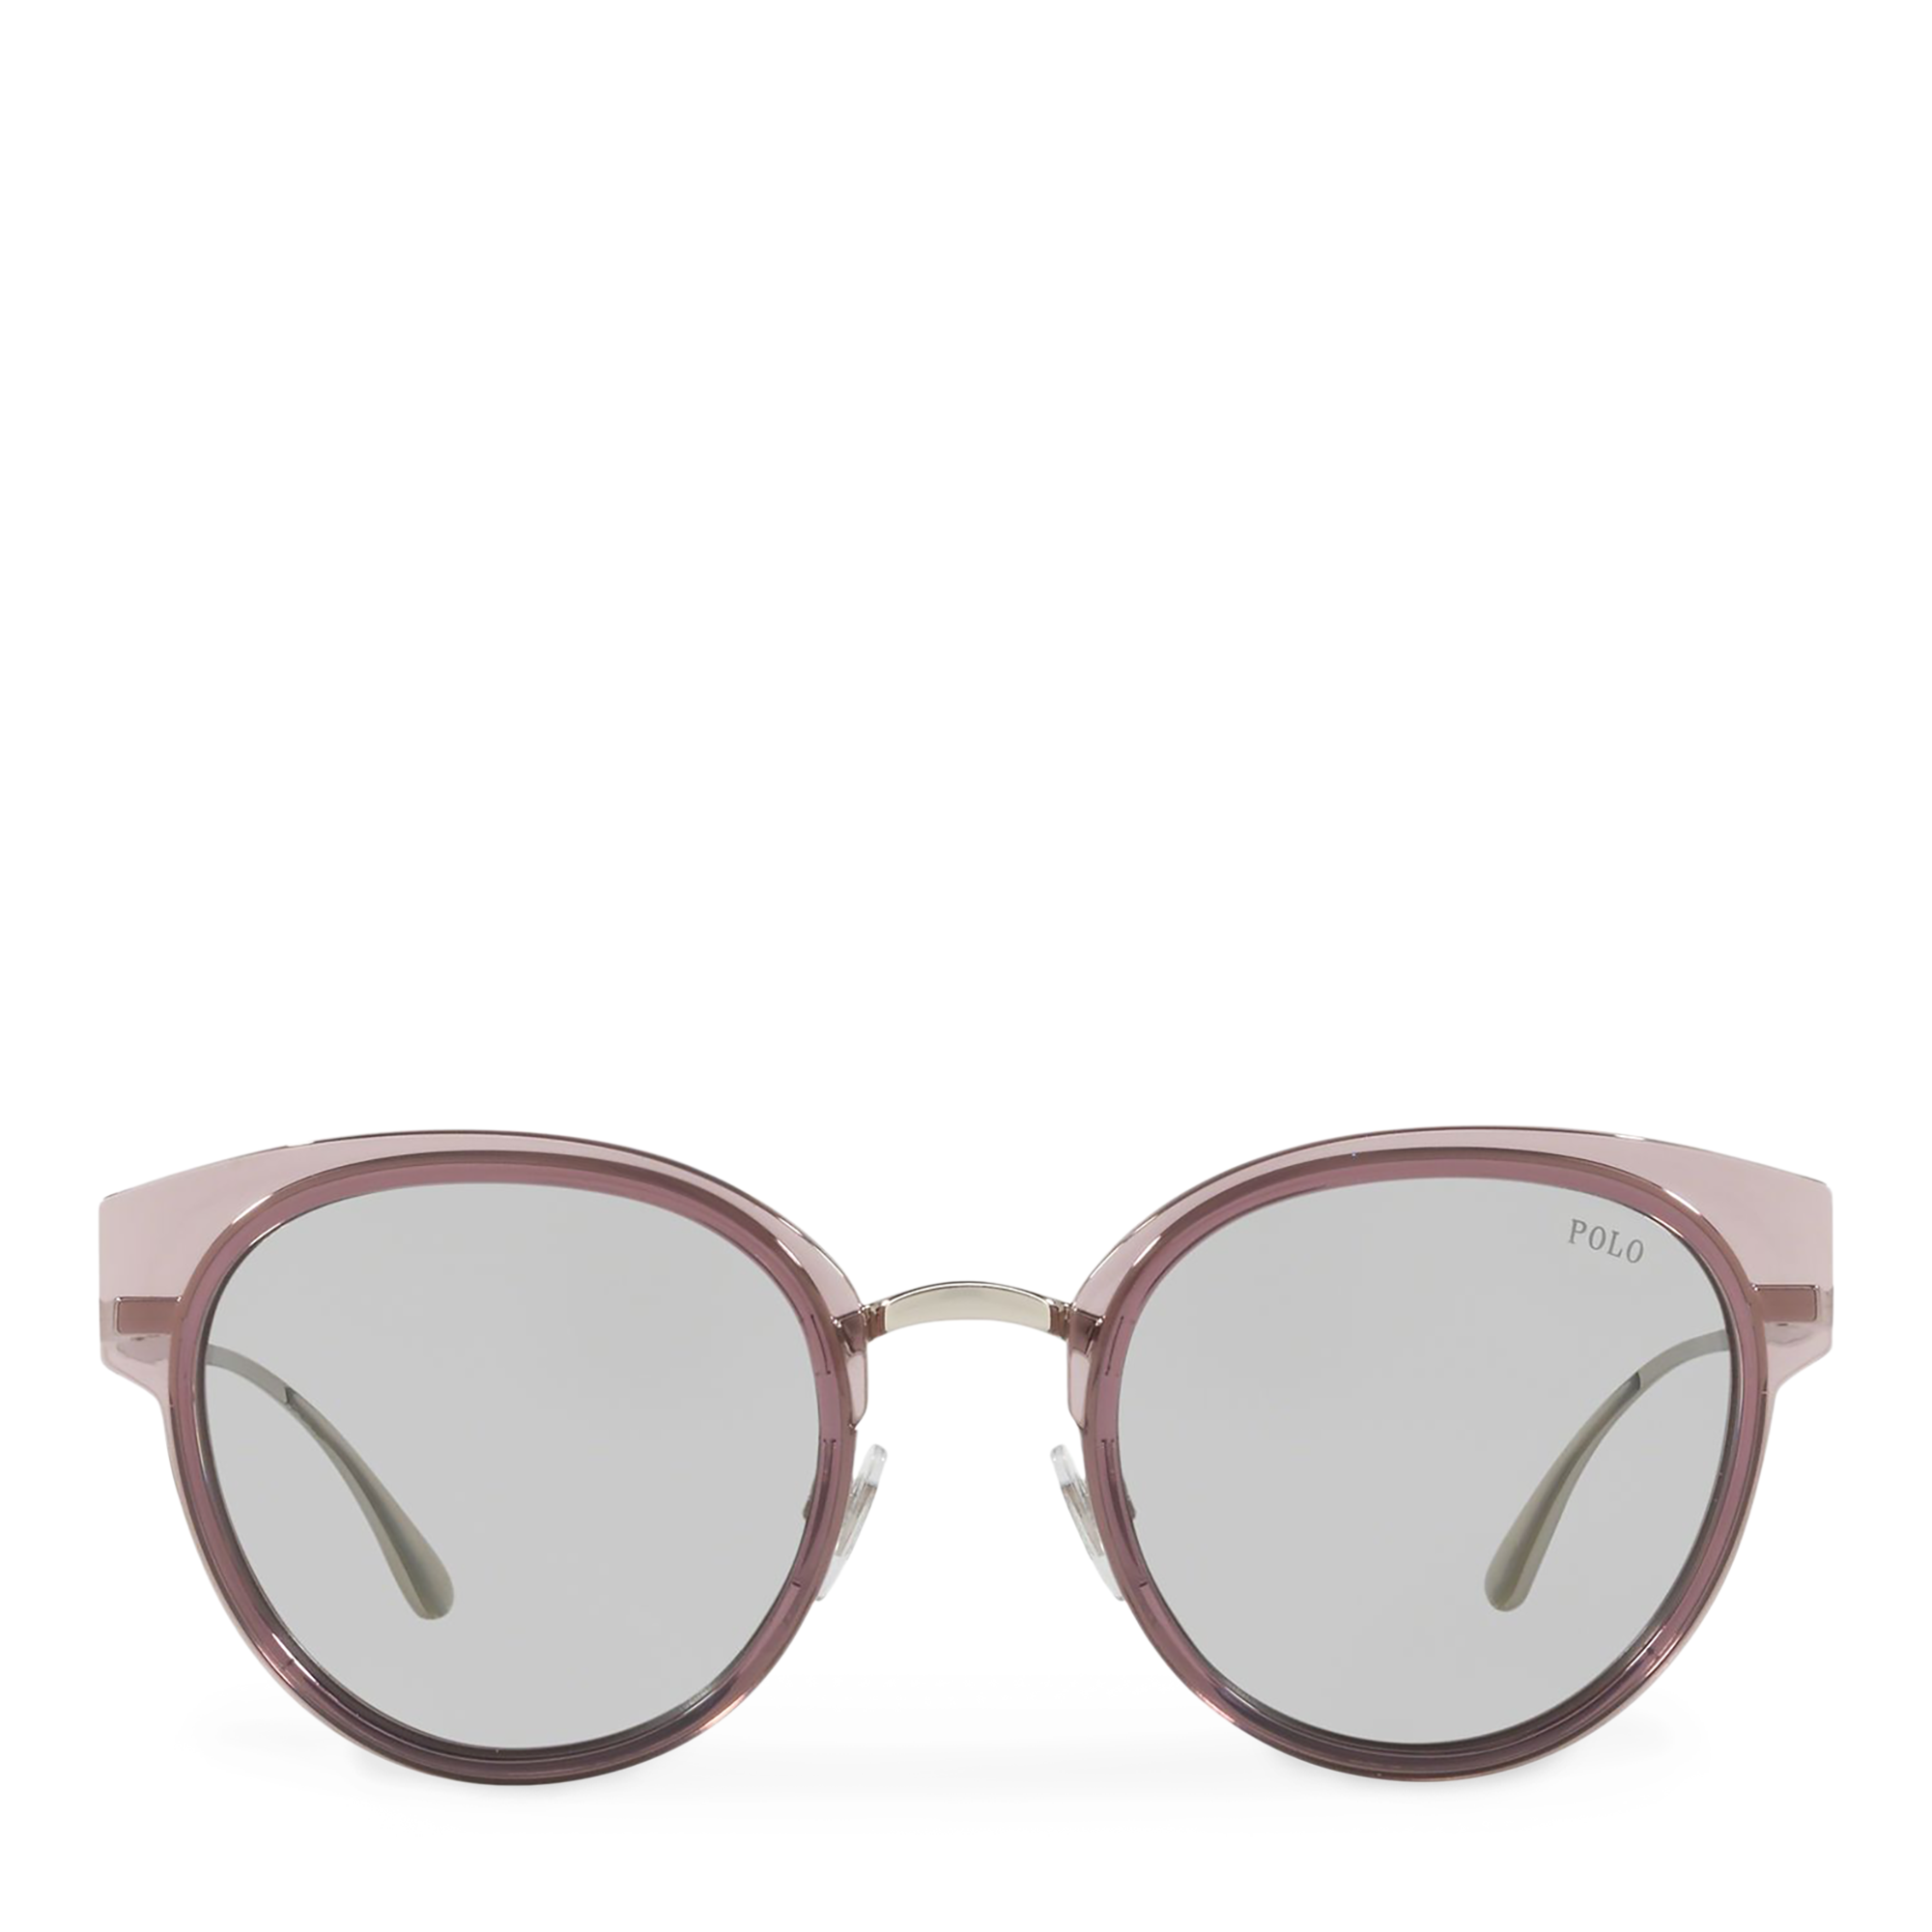 Ralph Lauren Panto Sunglasses. 1